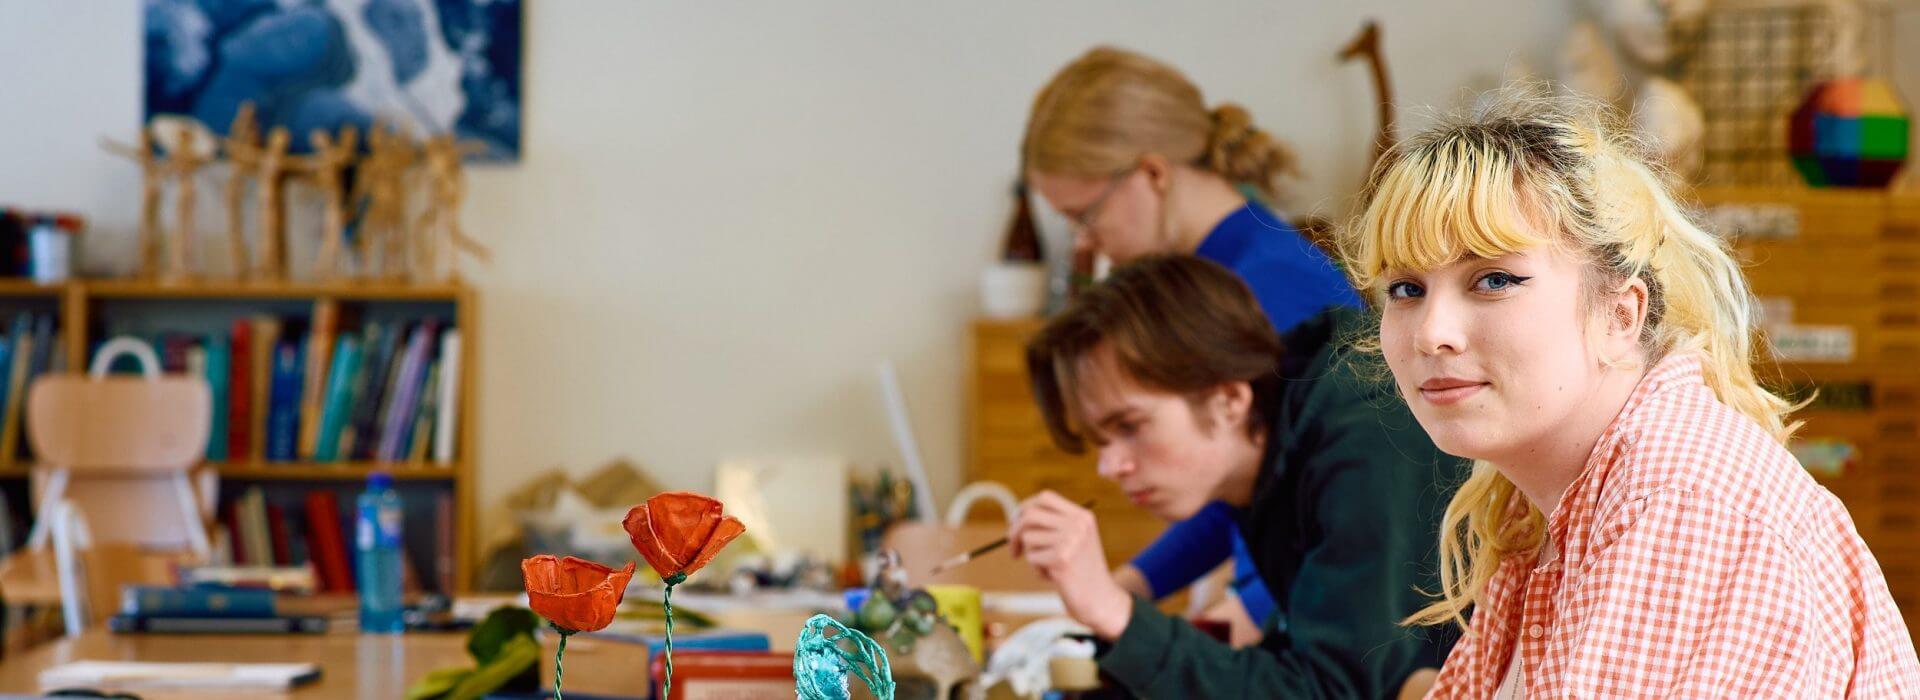 Kvinnlig elev sitter vid ett bord i en i bildsal med klasskamrater som jobbar på sina konstverk i bakgrunden